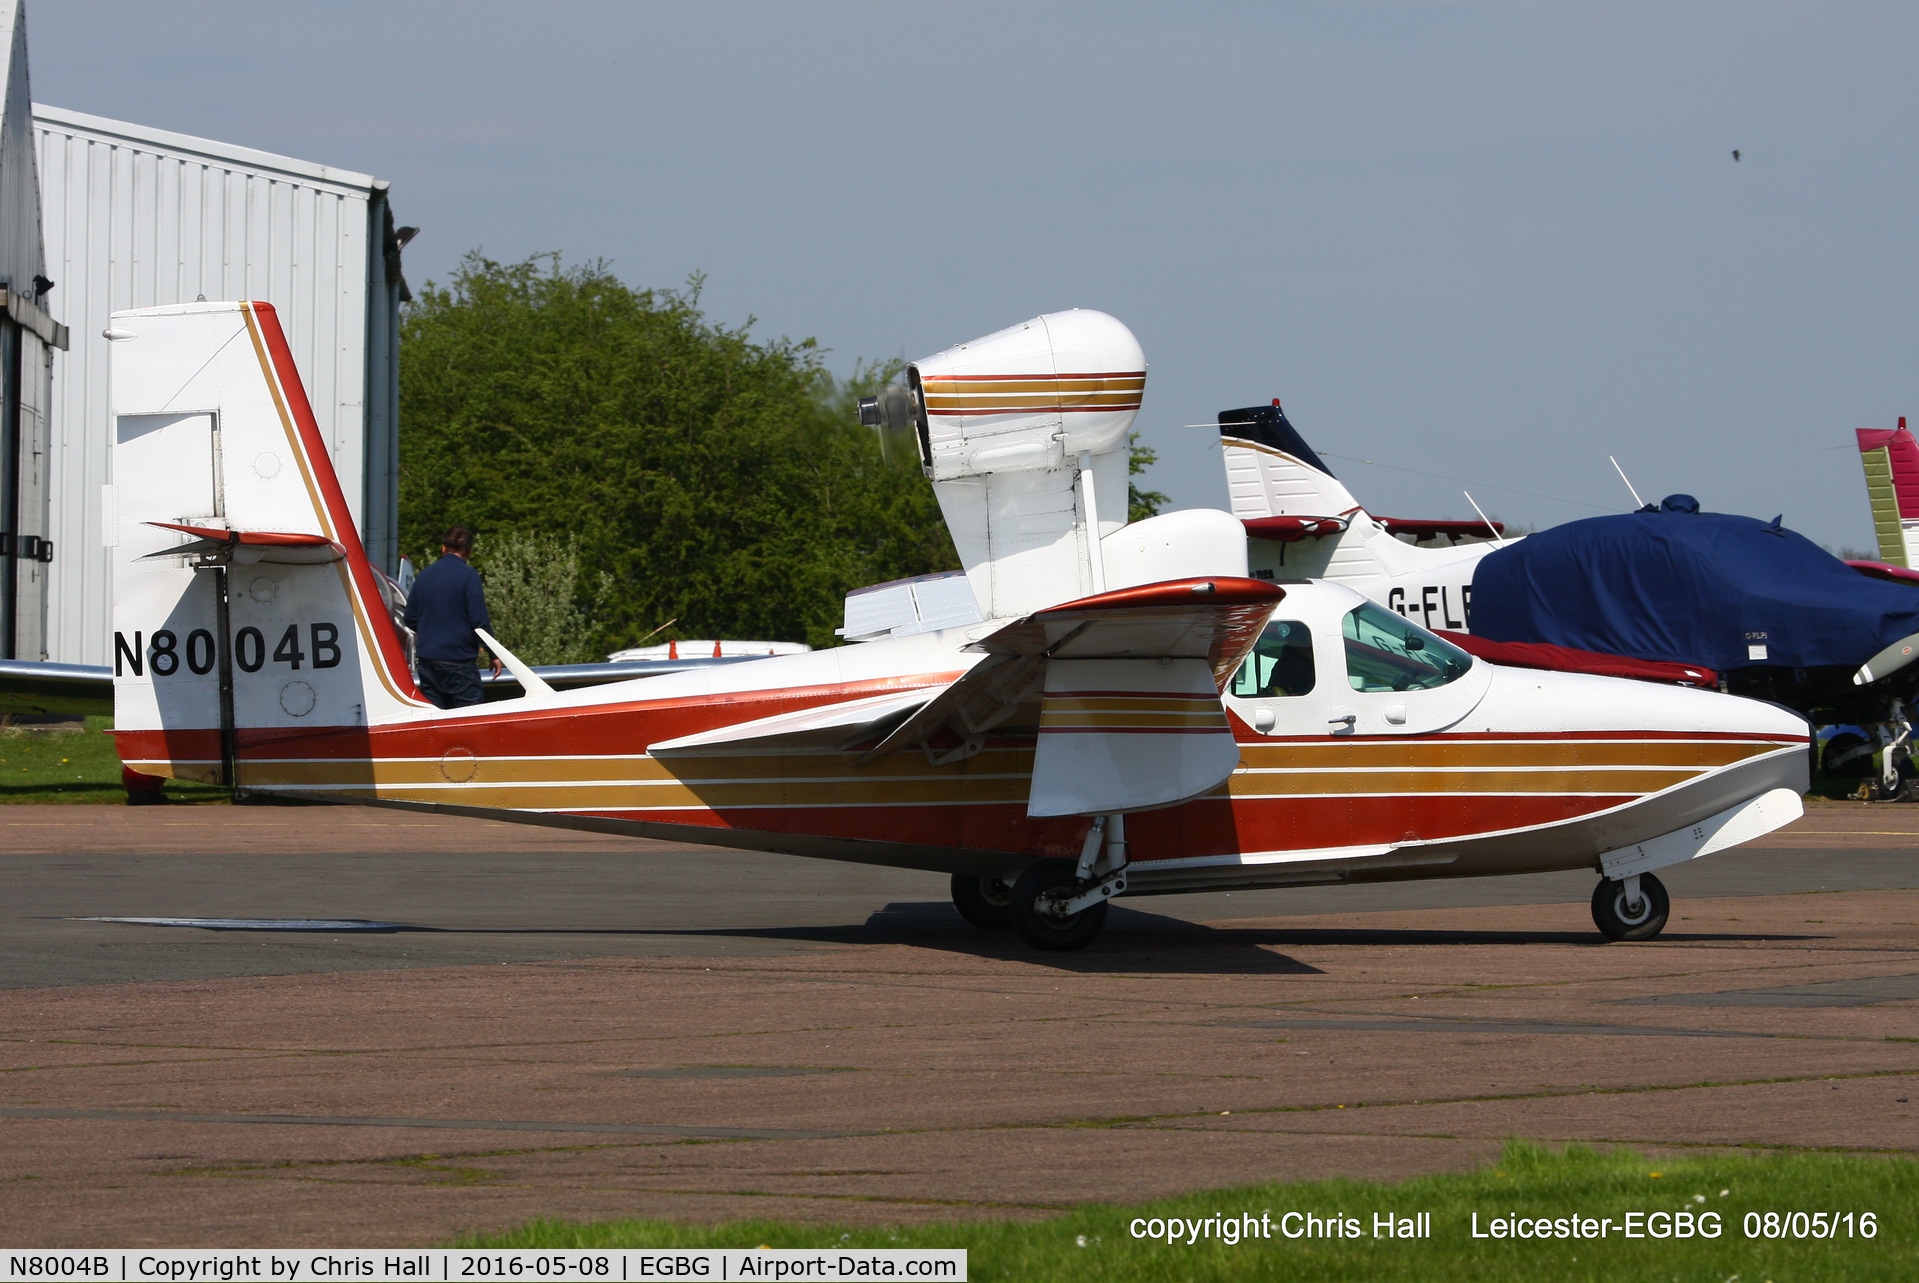 N8004B, 1980 Consolidated Aeronautics Inc. Lake LA-4-200 C/N 1022, Royal Aero Club air race at Leicester